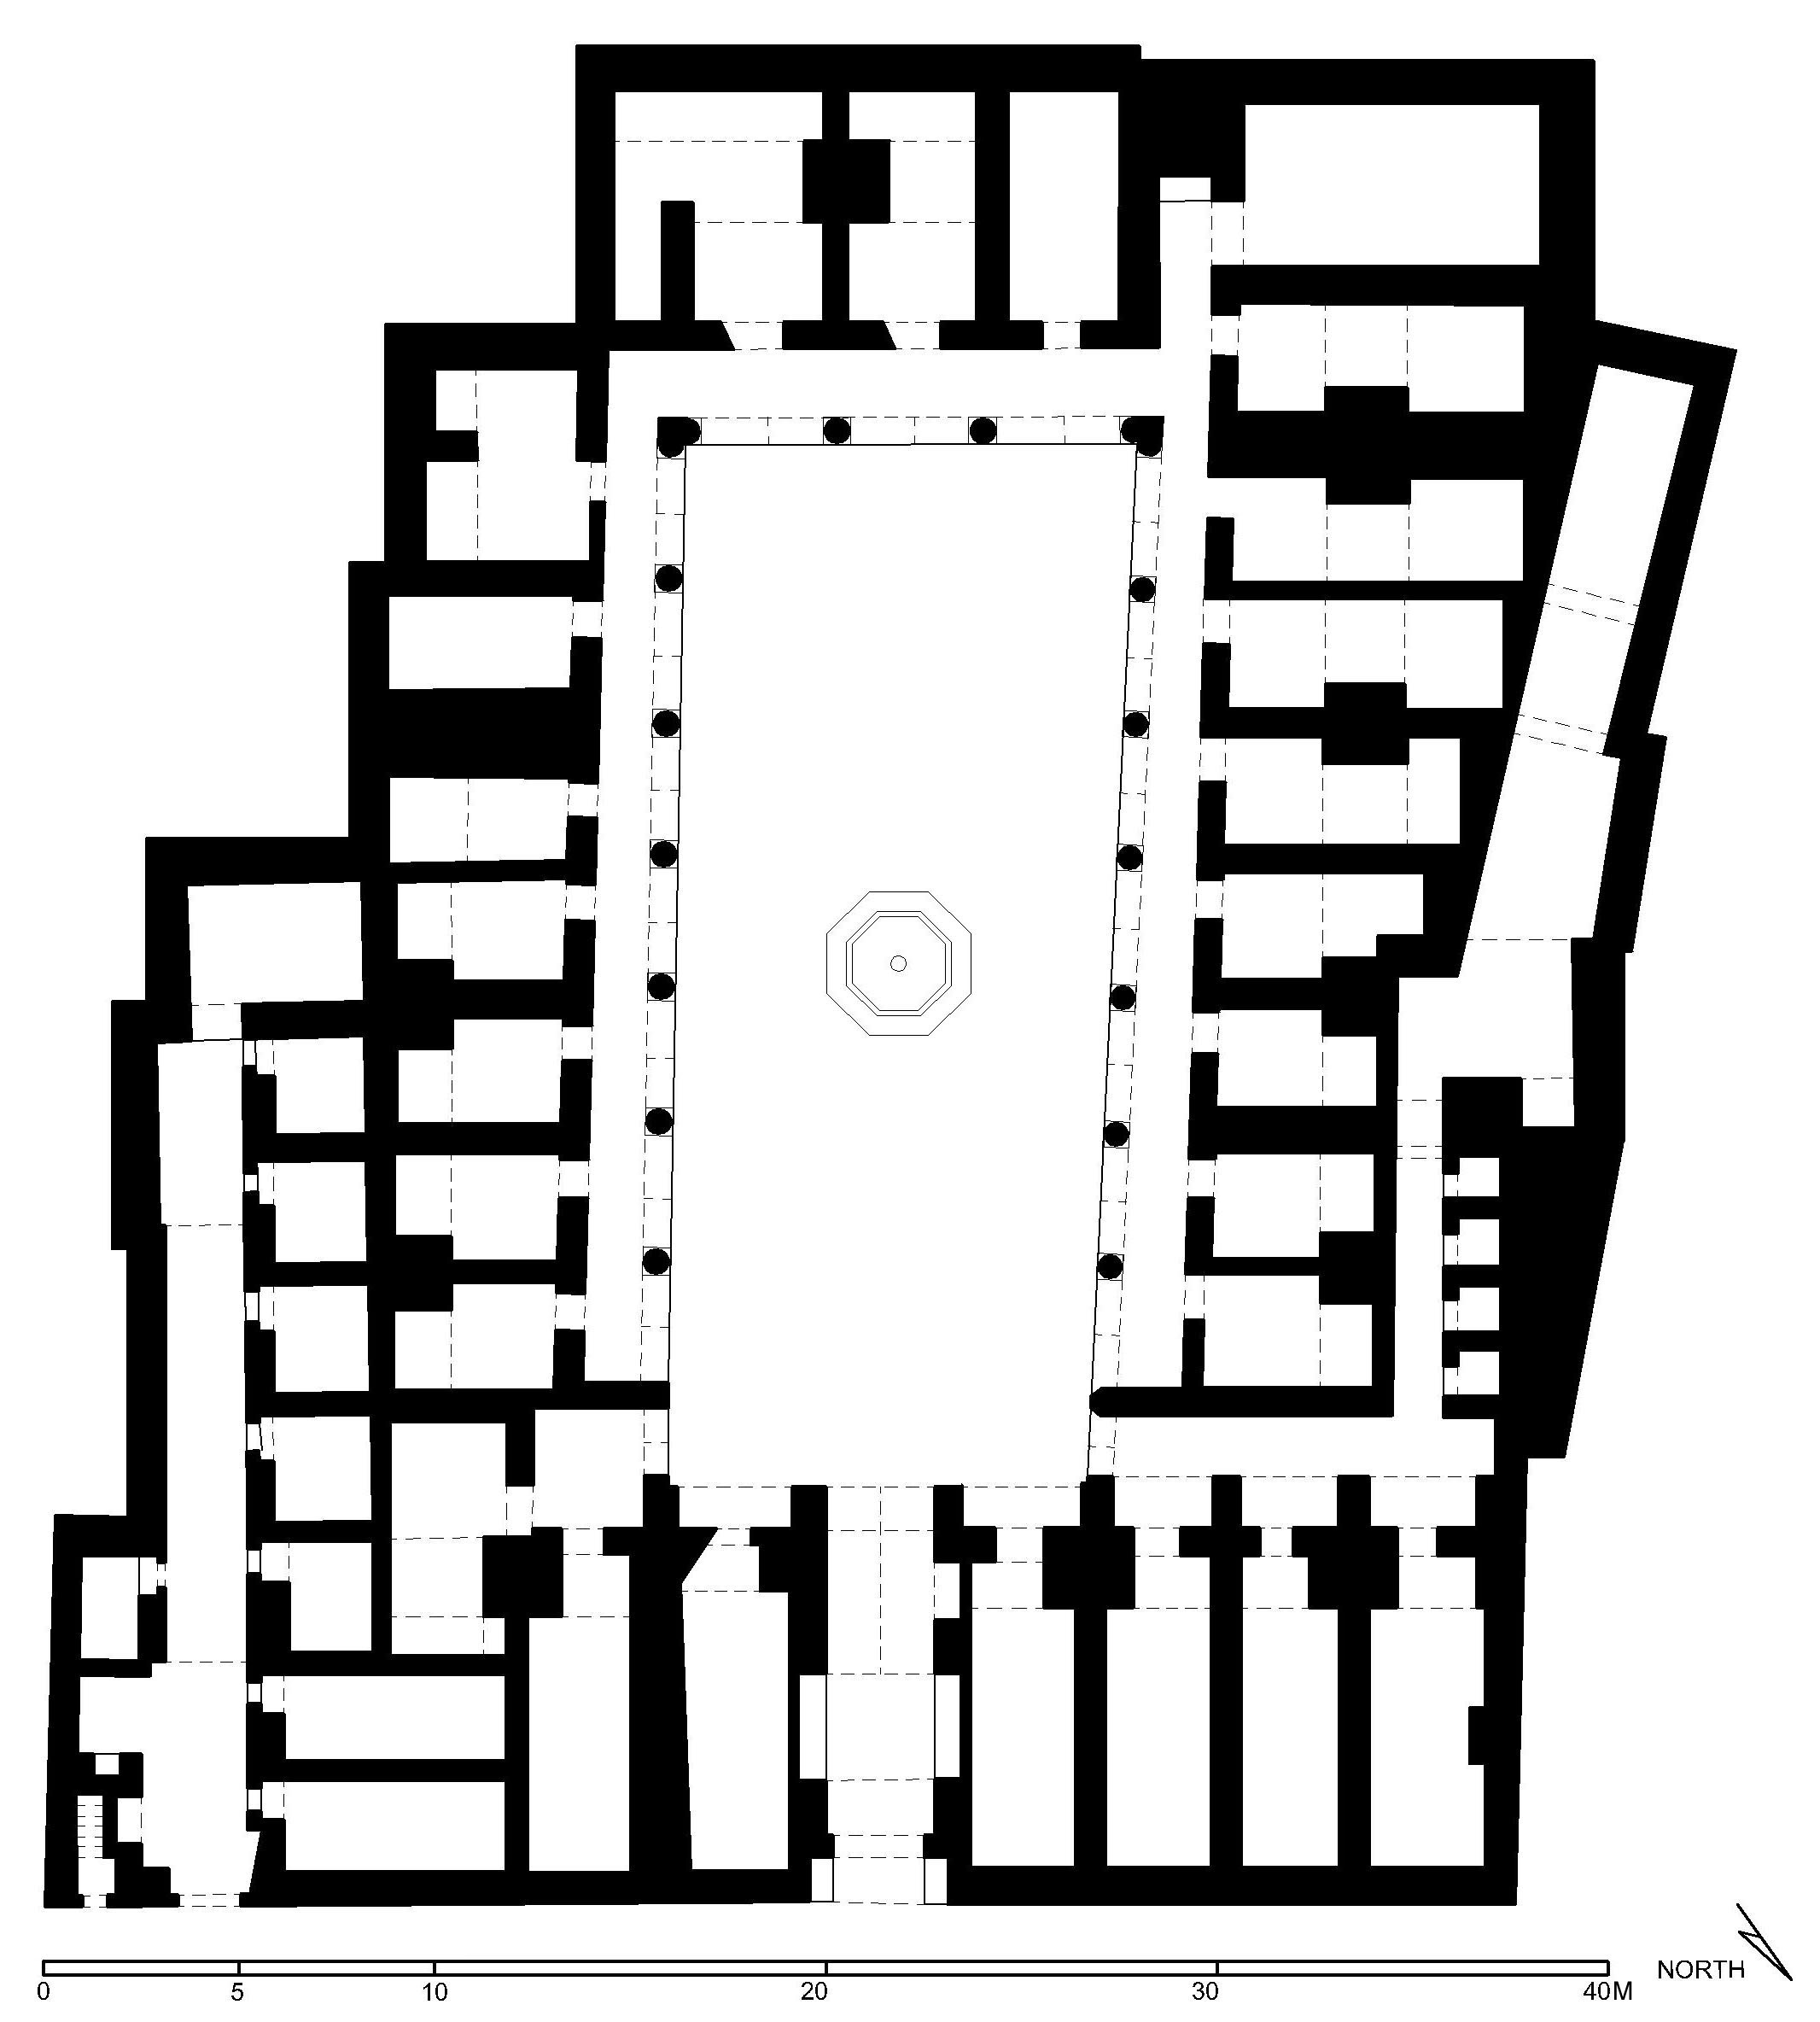 Floor plan of wikala (after Meinecke)